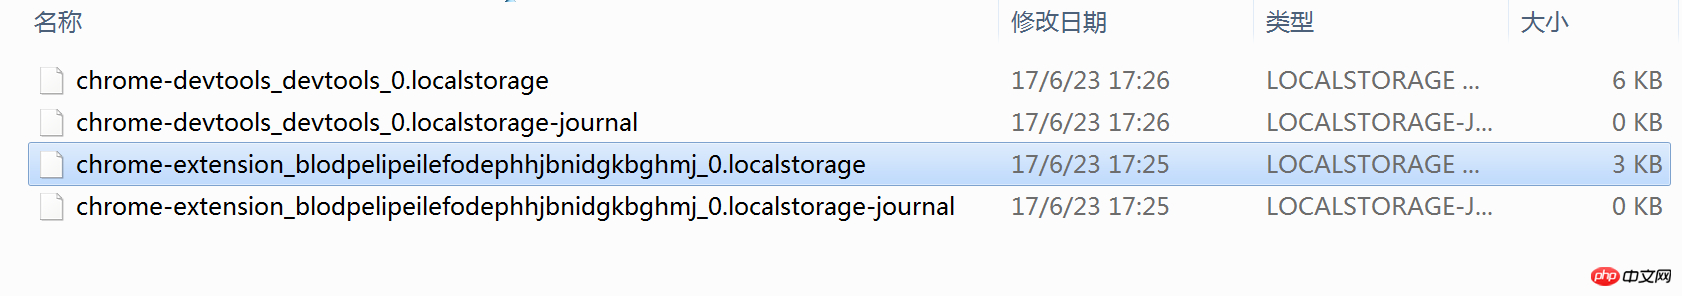 nw.js的localStorage的物理储存实例详解